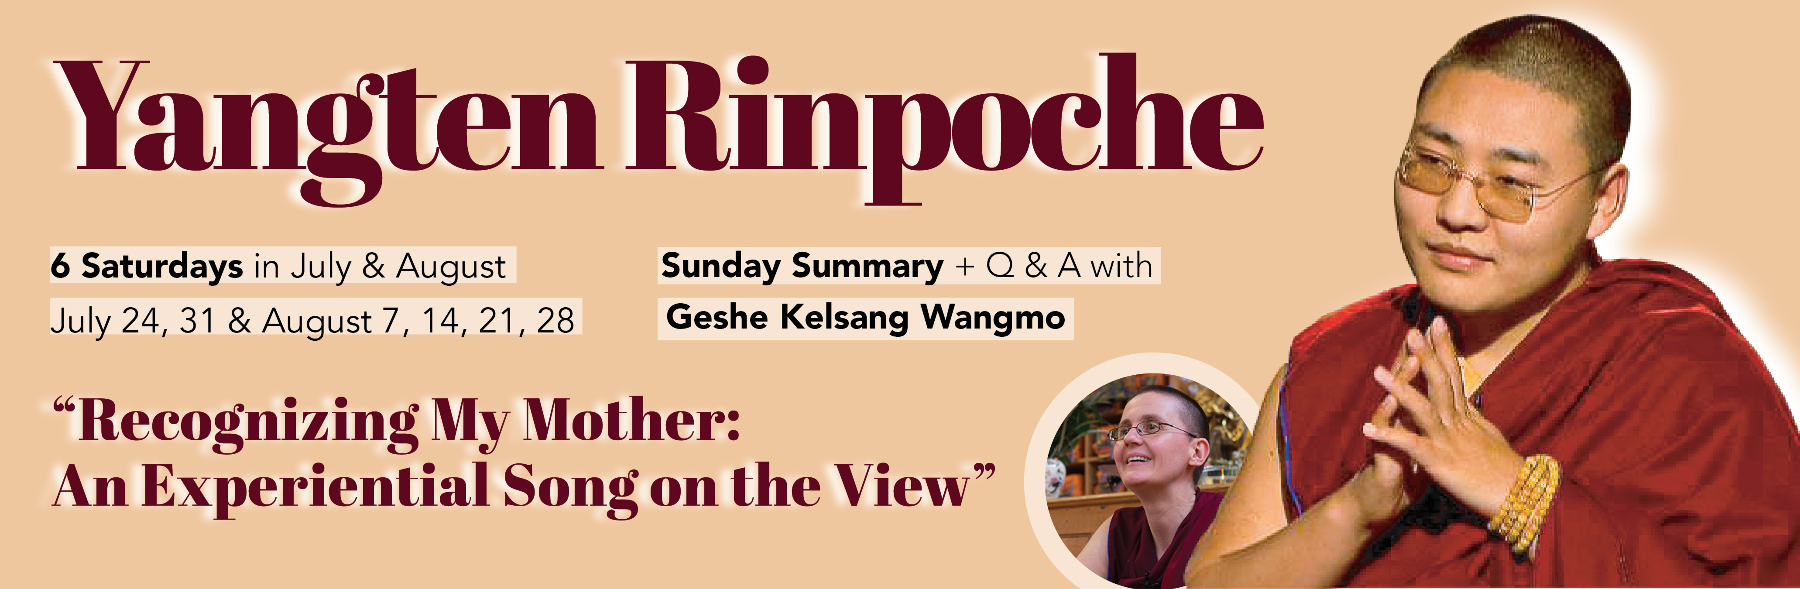 6 Weekends with Yangten Rinpoche & Geshe Kelsang Wangmo